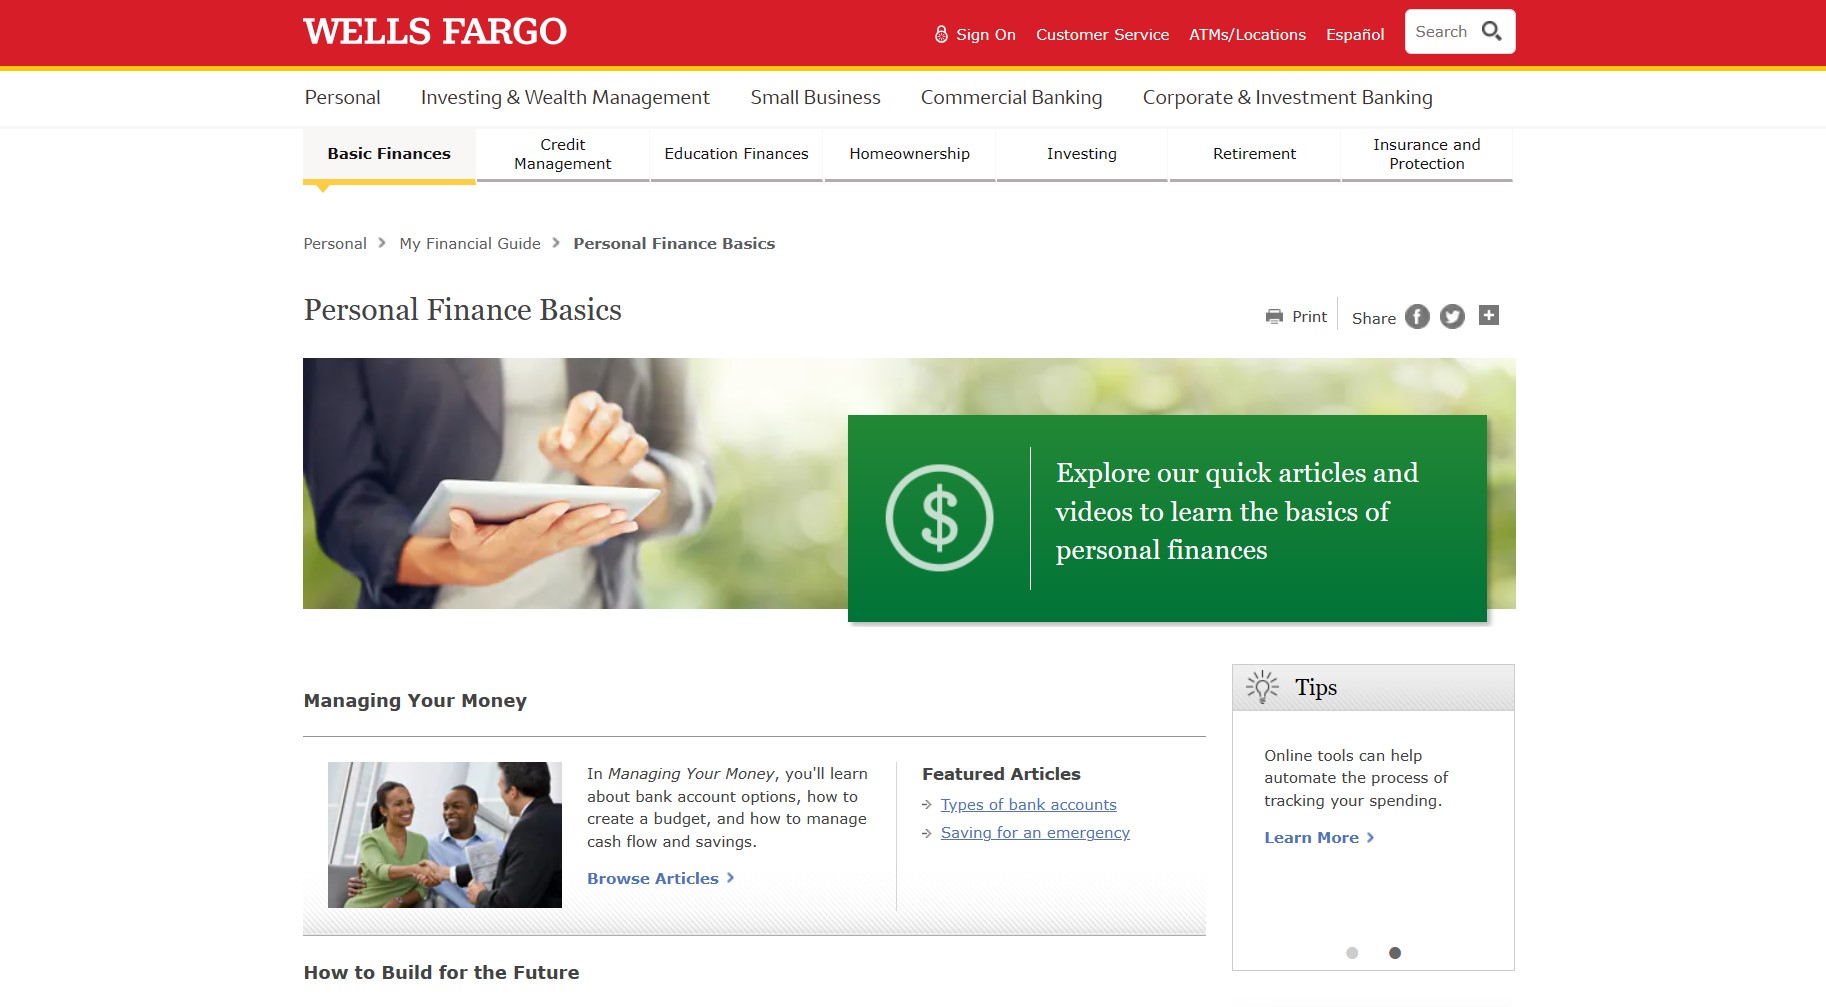 Wells Fargo educational resources